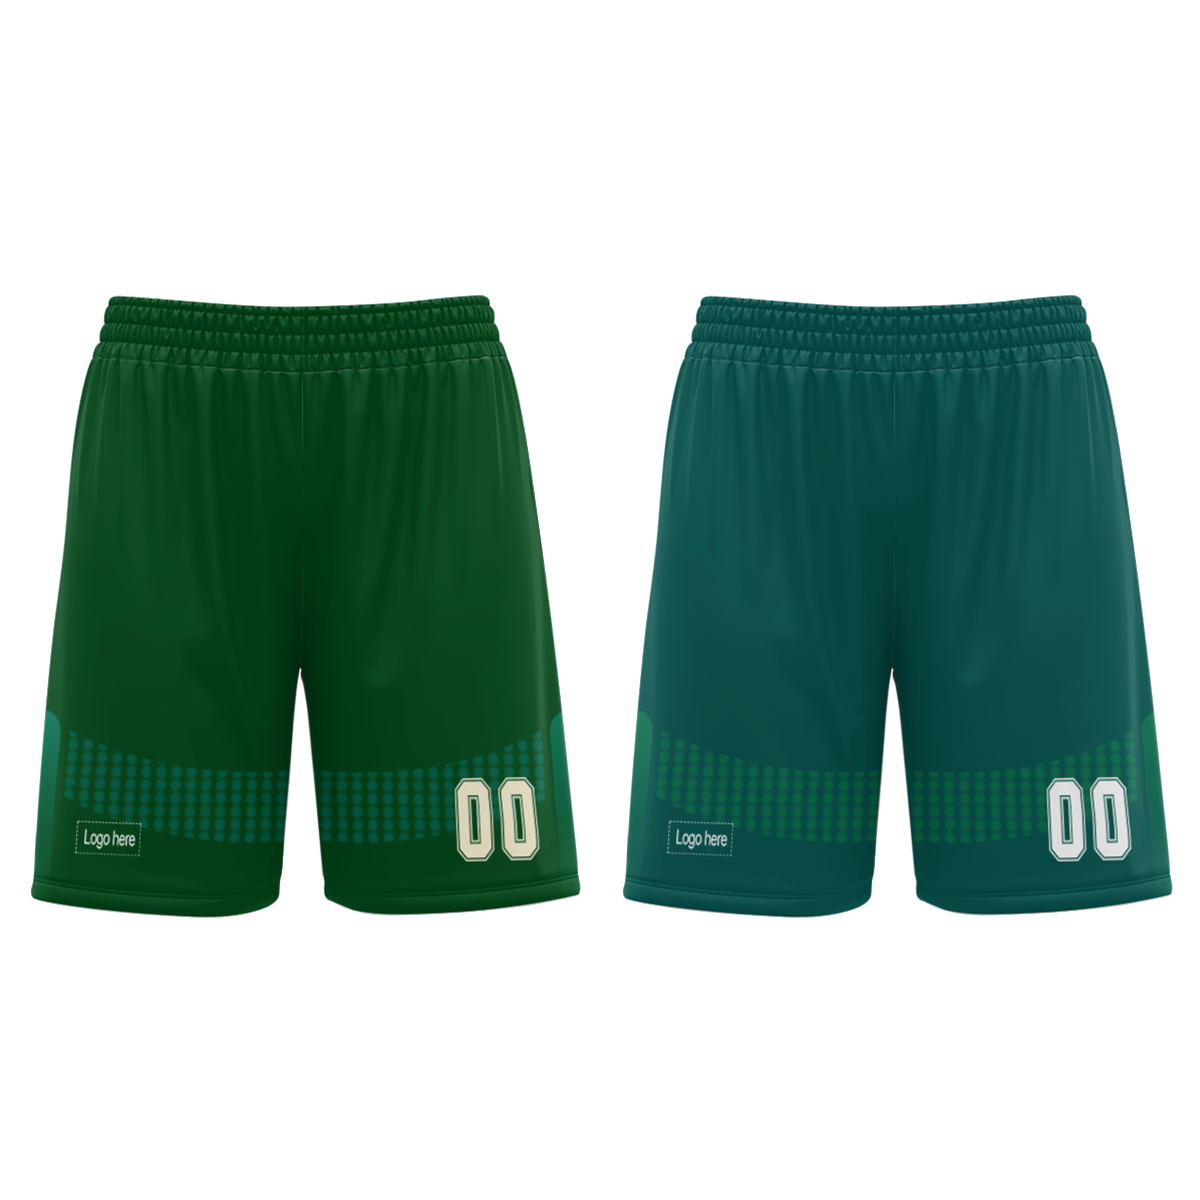 custom-sublimation-polyester-crewneck-quick-dry-club-basketball-jersey-blank-basketball-uniforms-sets-at-cj-pod-7